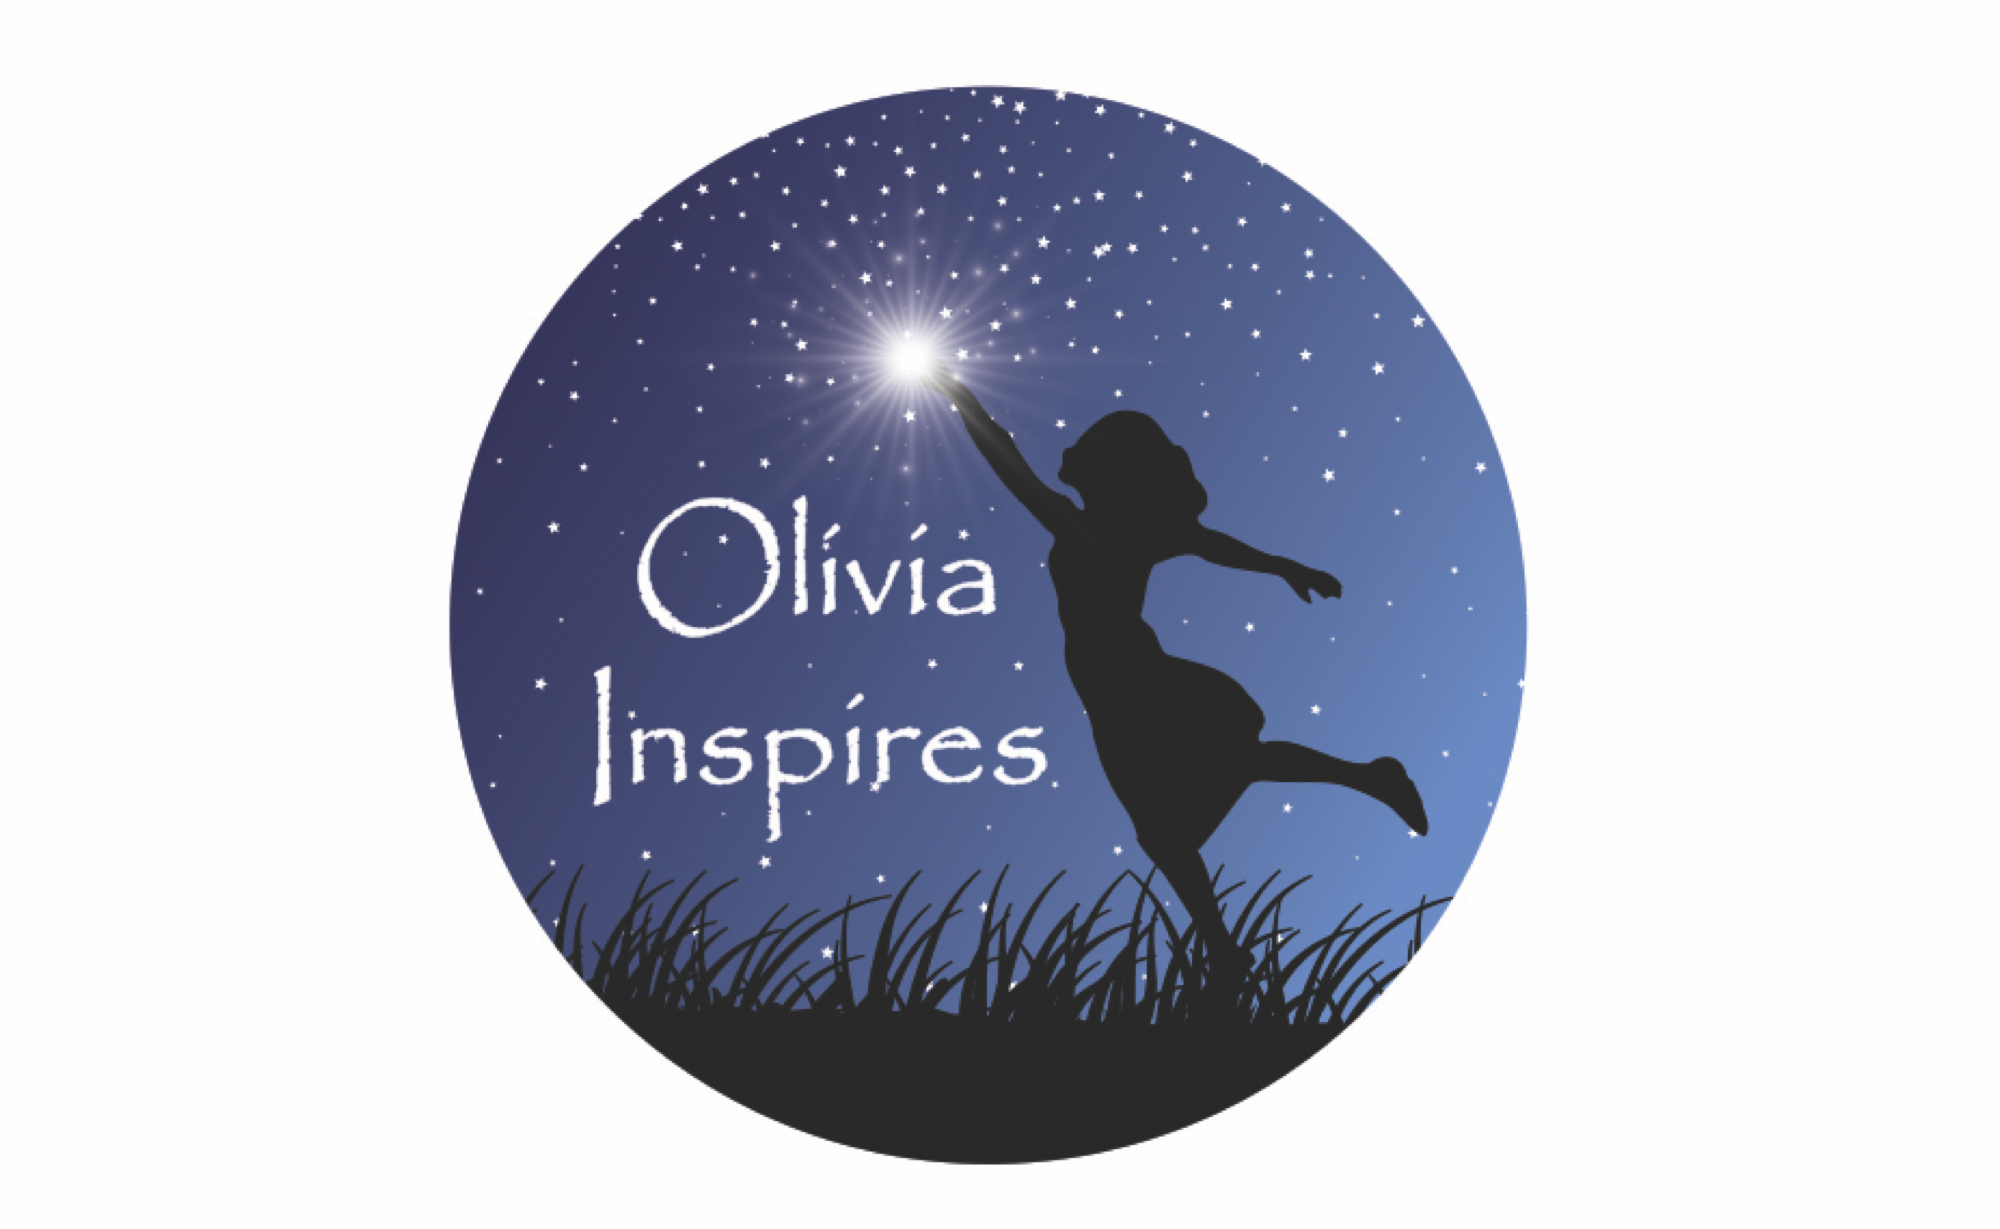 Olivia Inspires logo